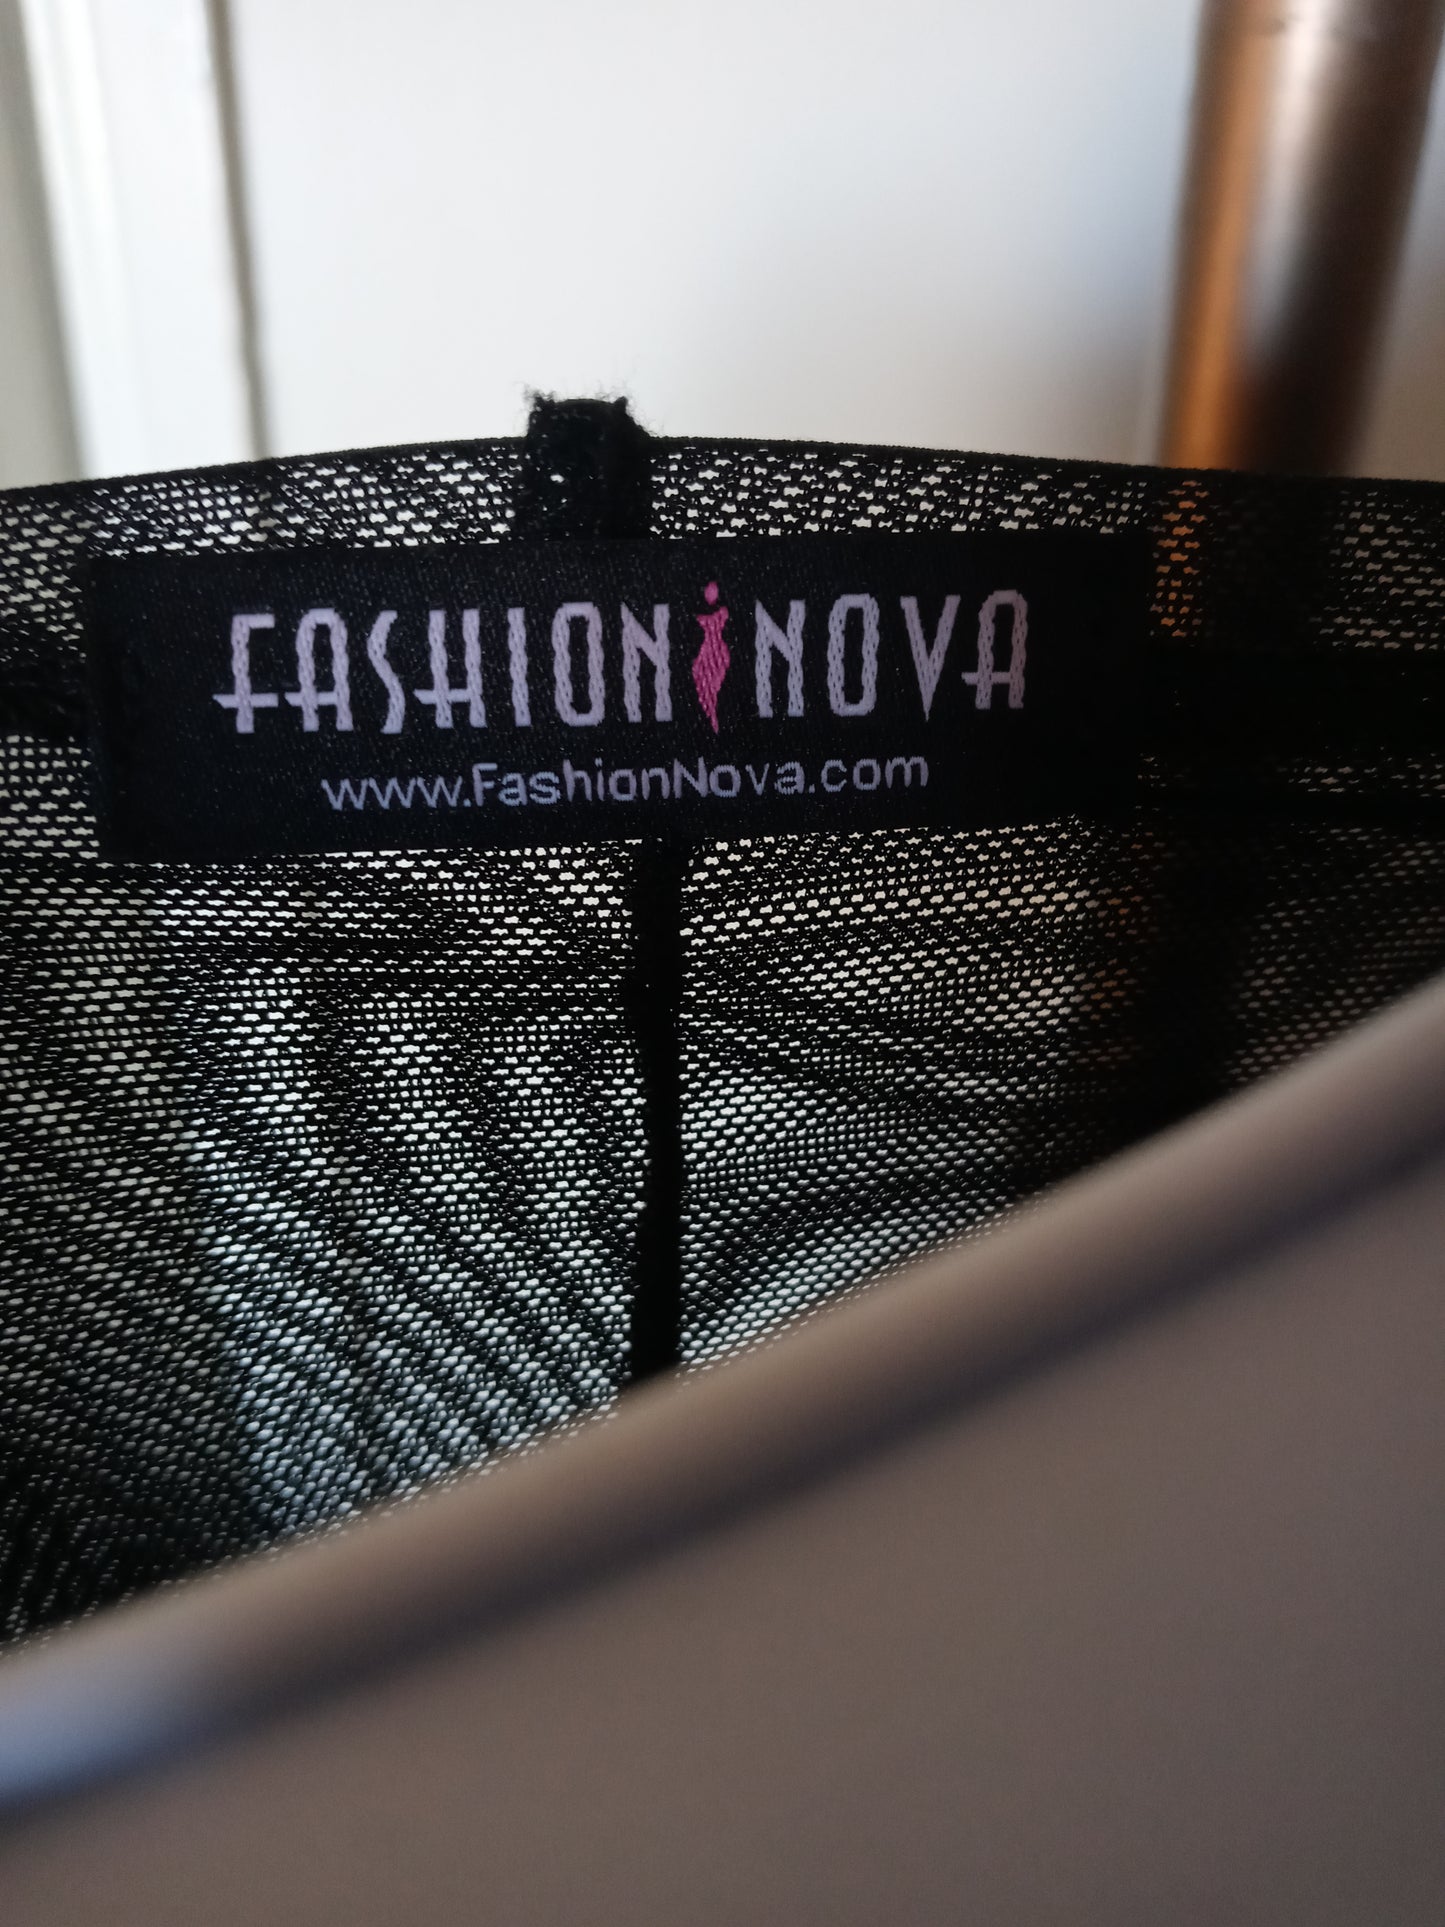 Fashion Nova See thru Long Sleeve Black Hoodie Crop Top